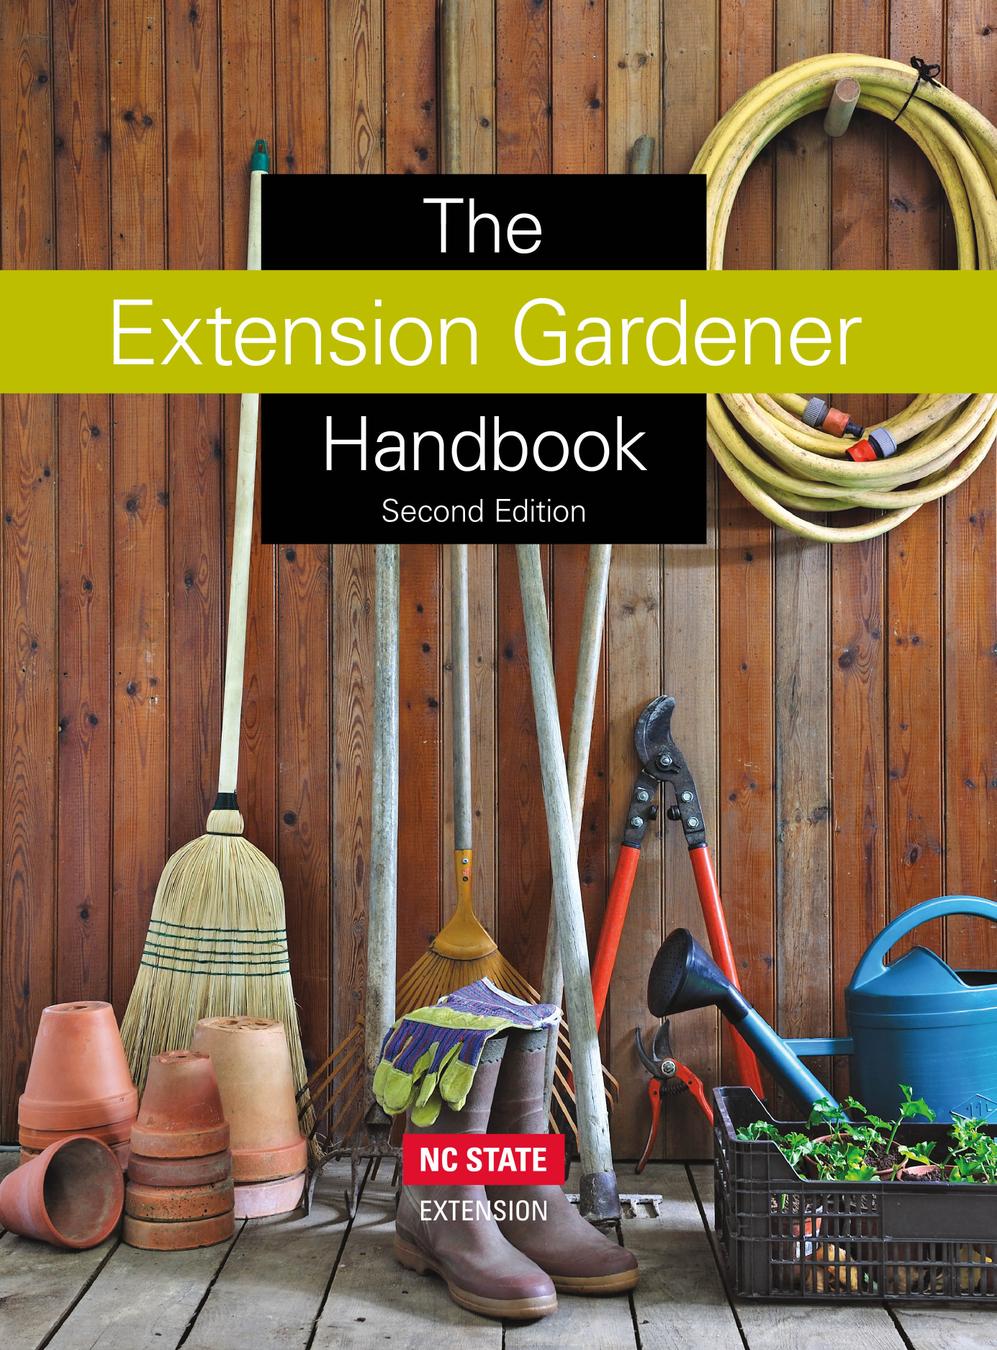 Extension Gardener Handbook cover photo